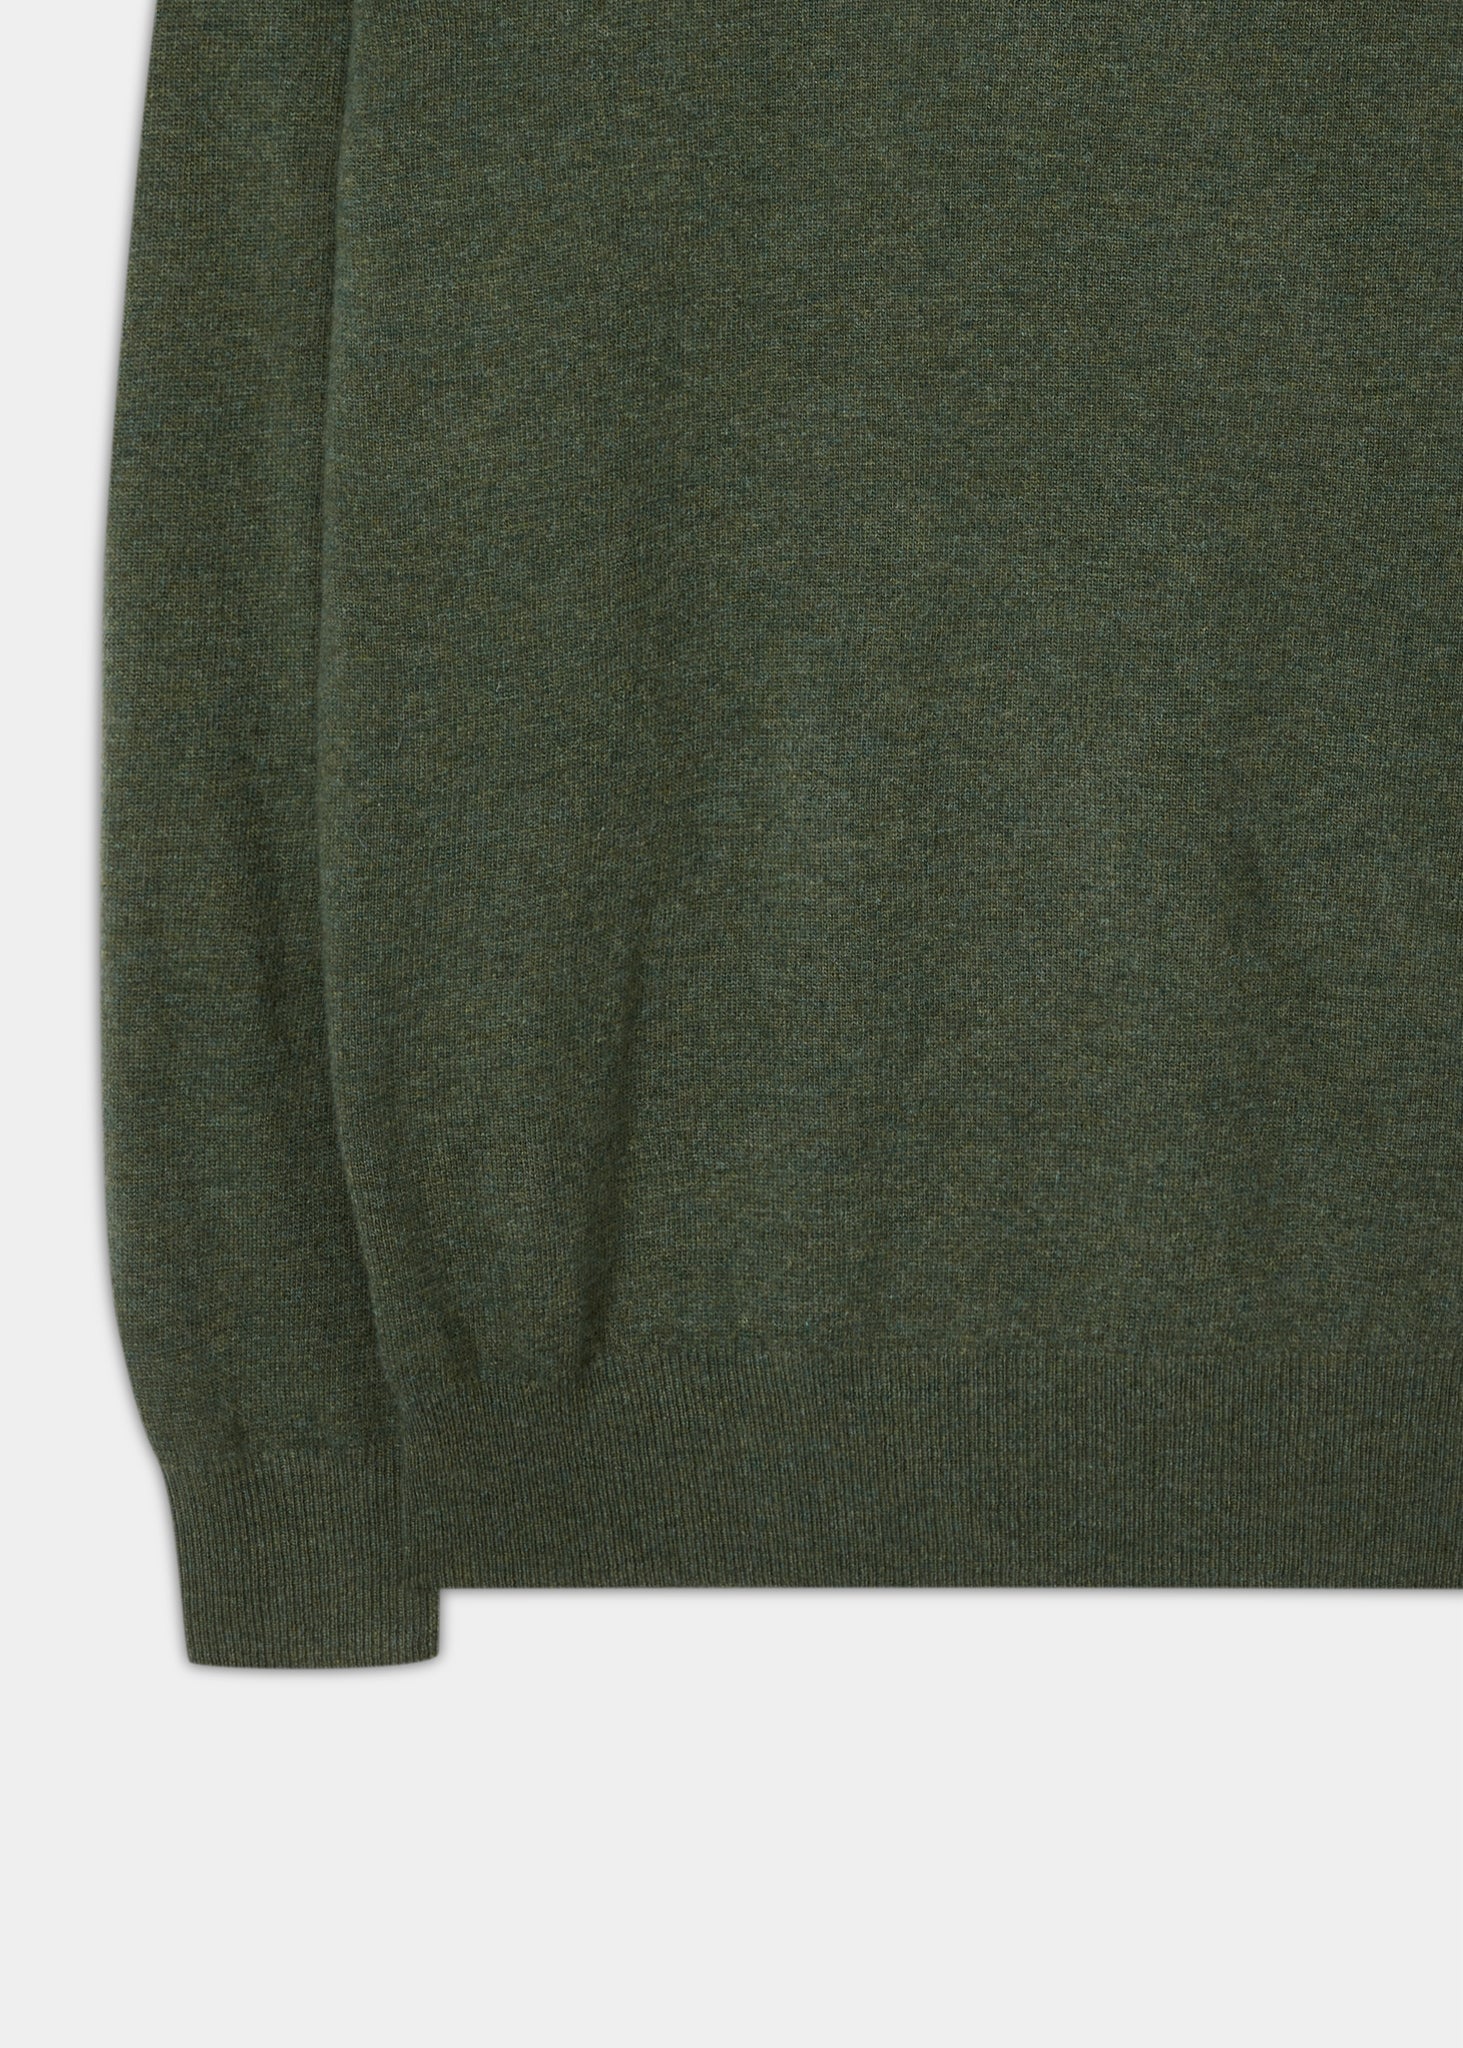 Geelong-Wool-Sweater-Rosemary